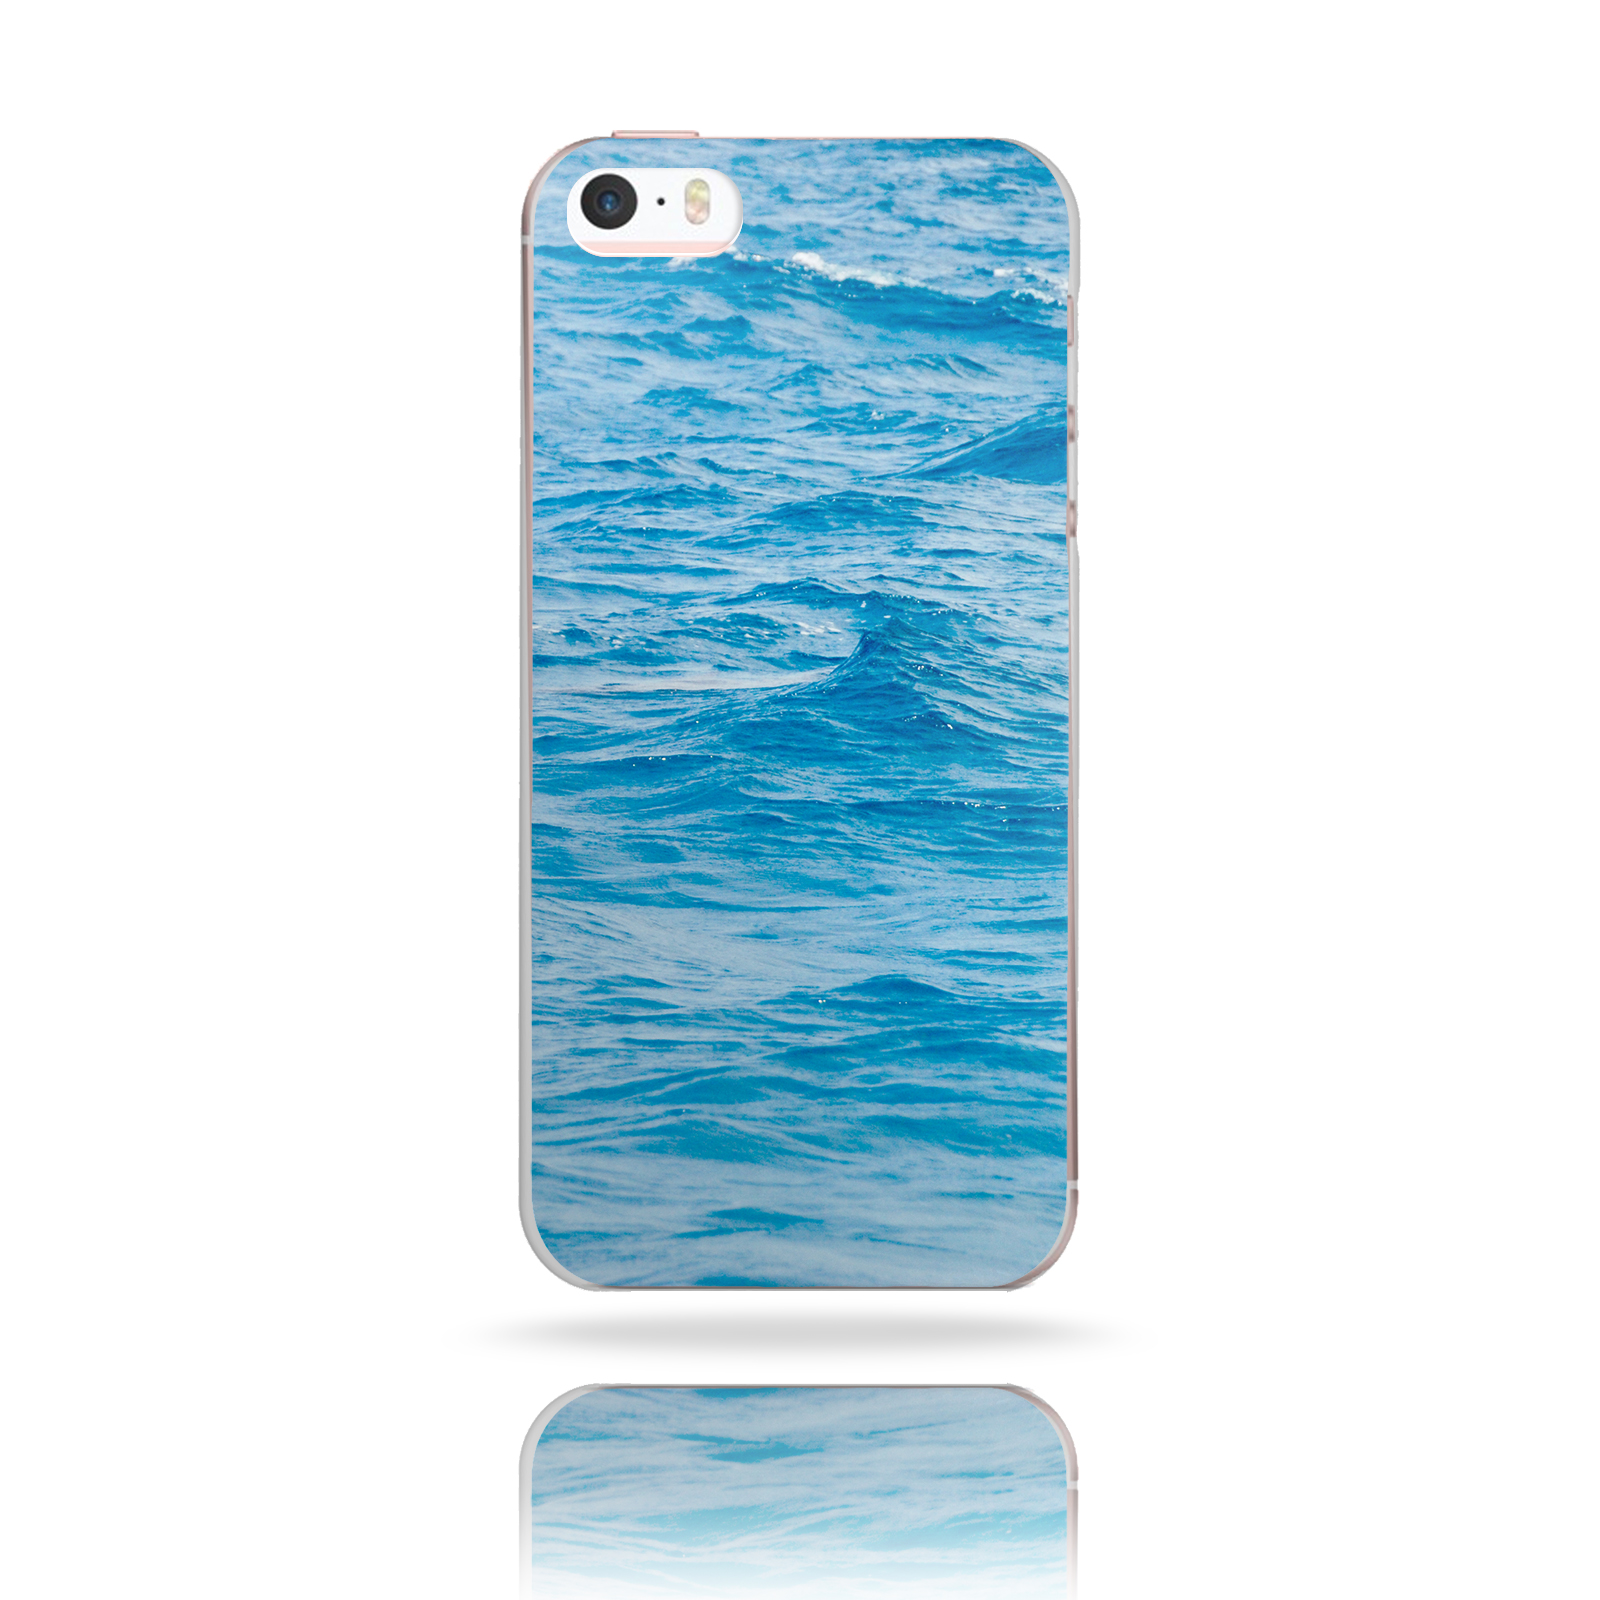 (BG0066) OCEAN WAVES PRINT HARD PLASTIC PHONE CASE COVER